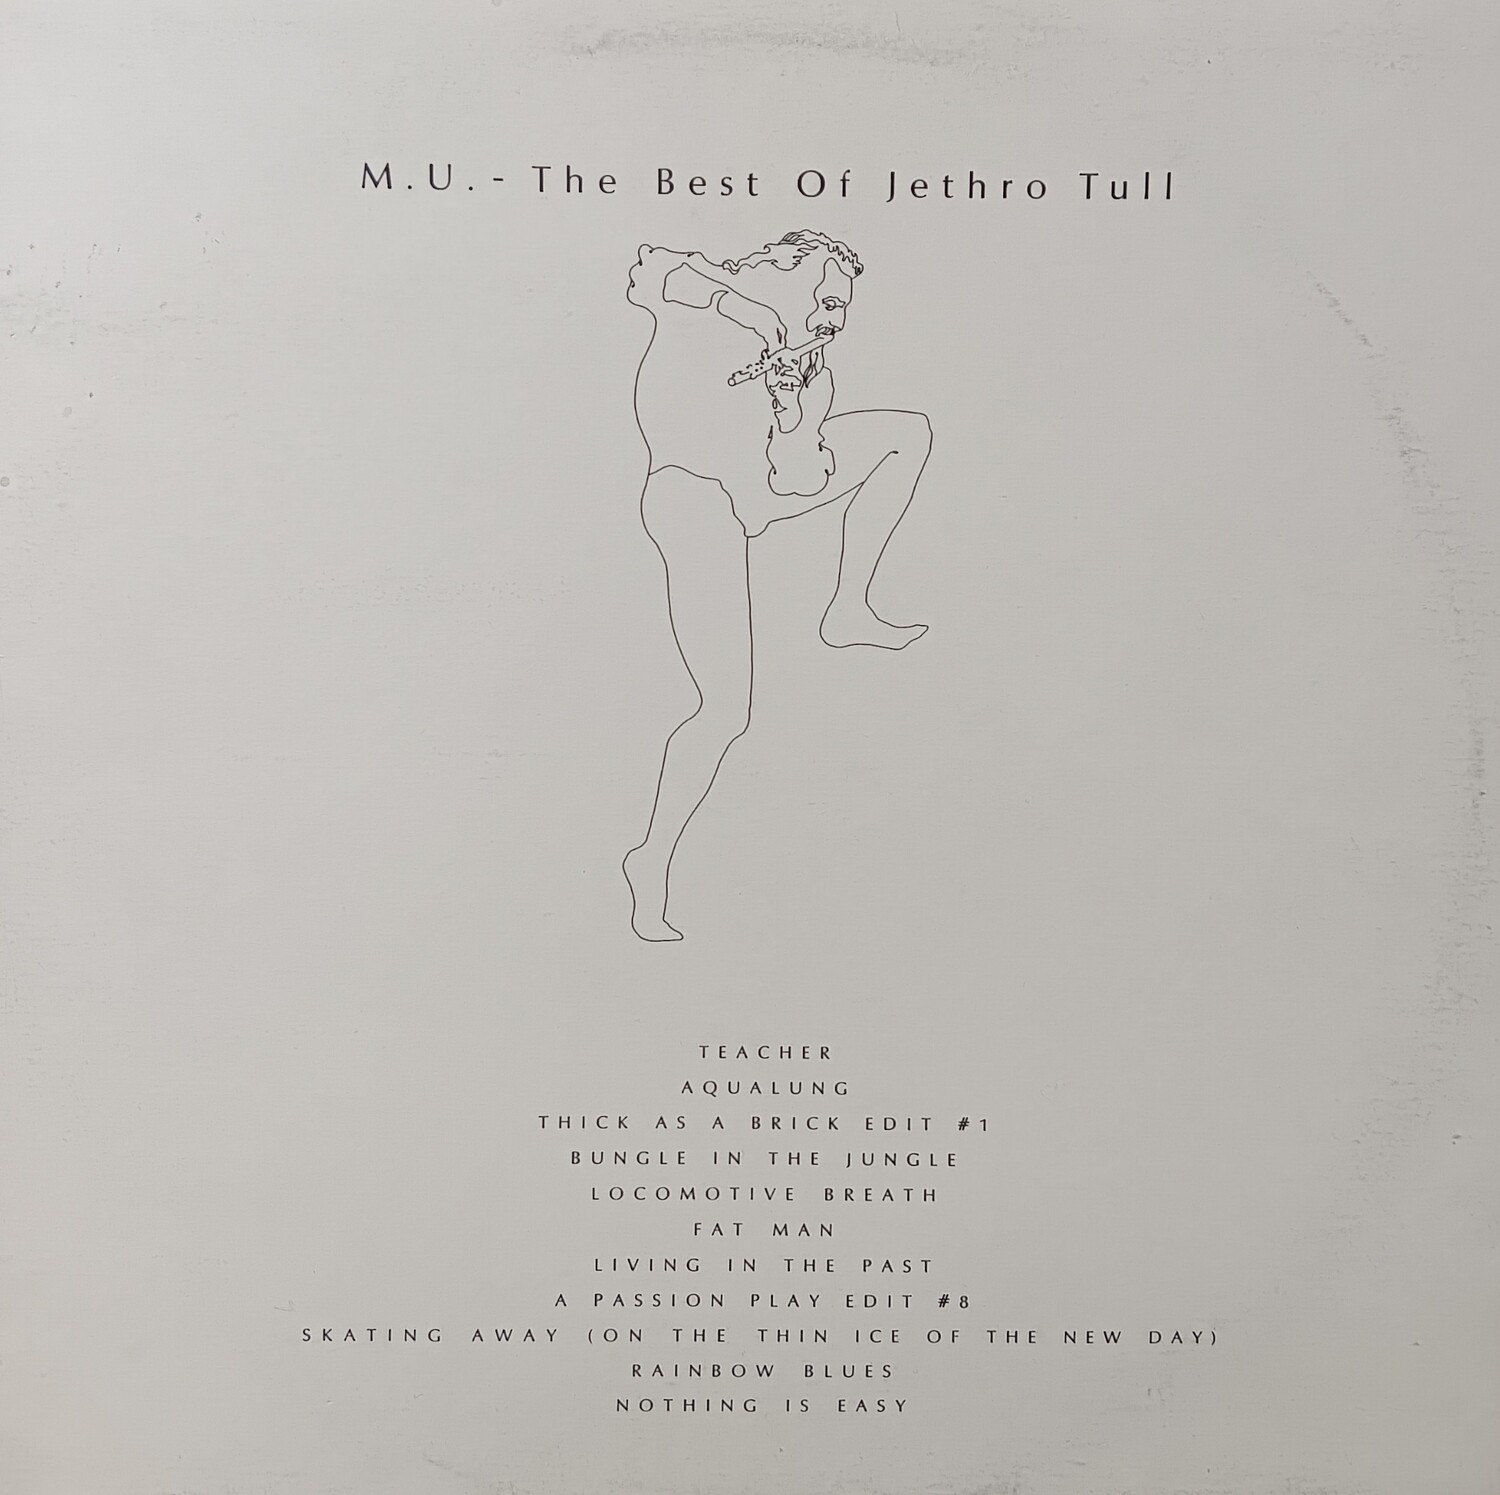 JETHRO TULL - M.U. The Best of Jethro Tull